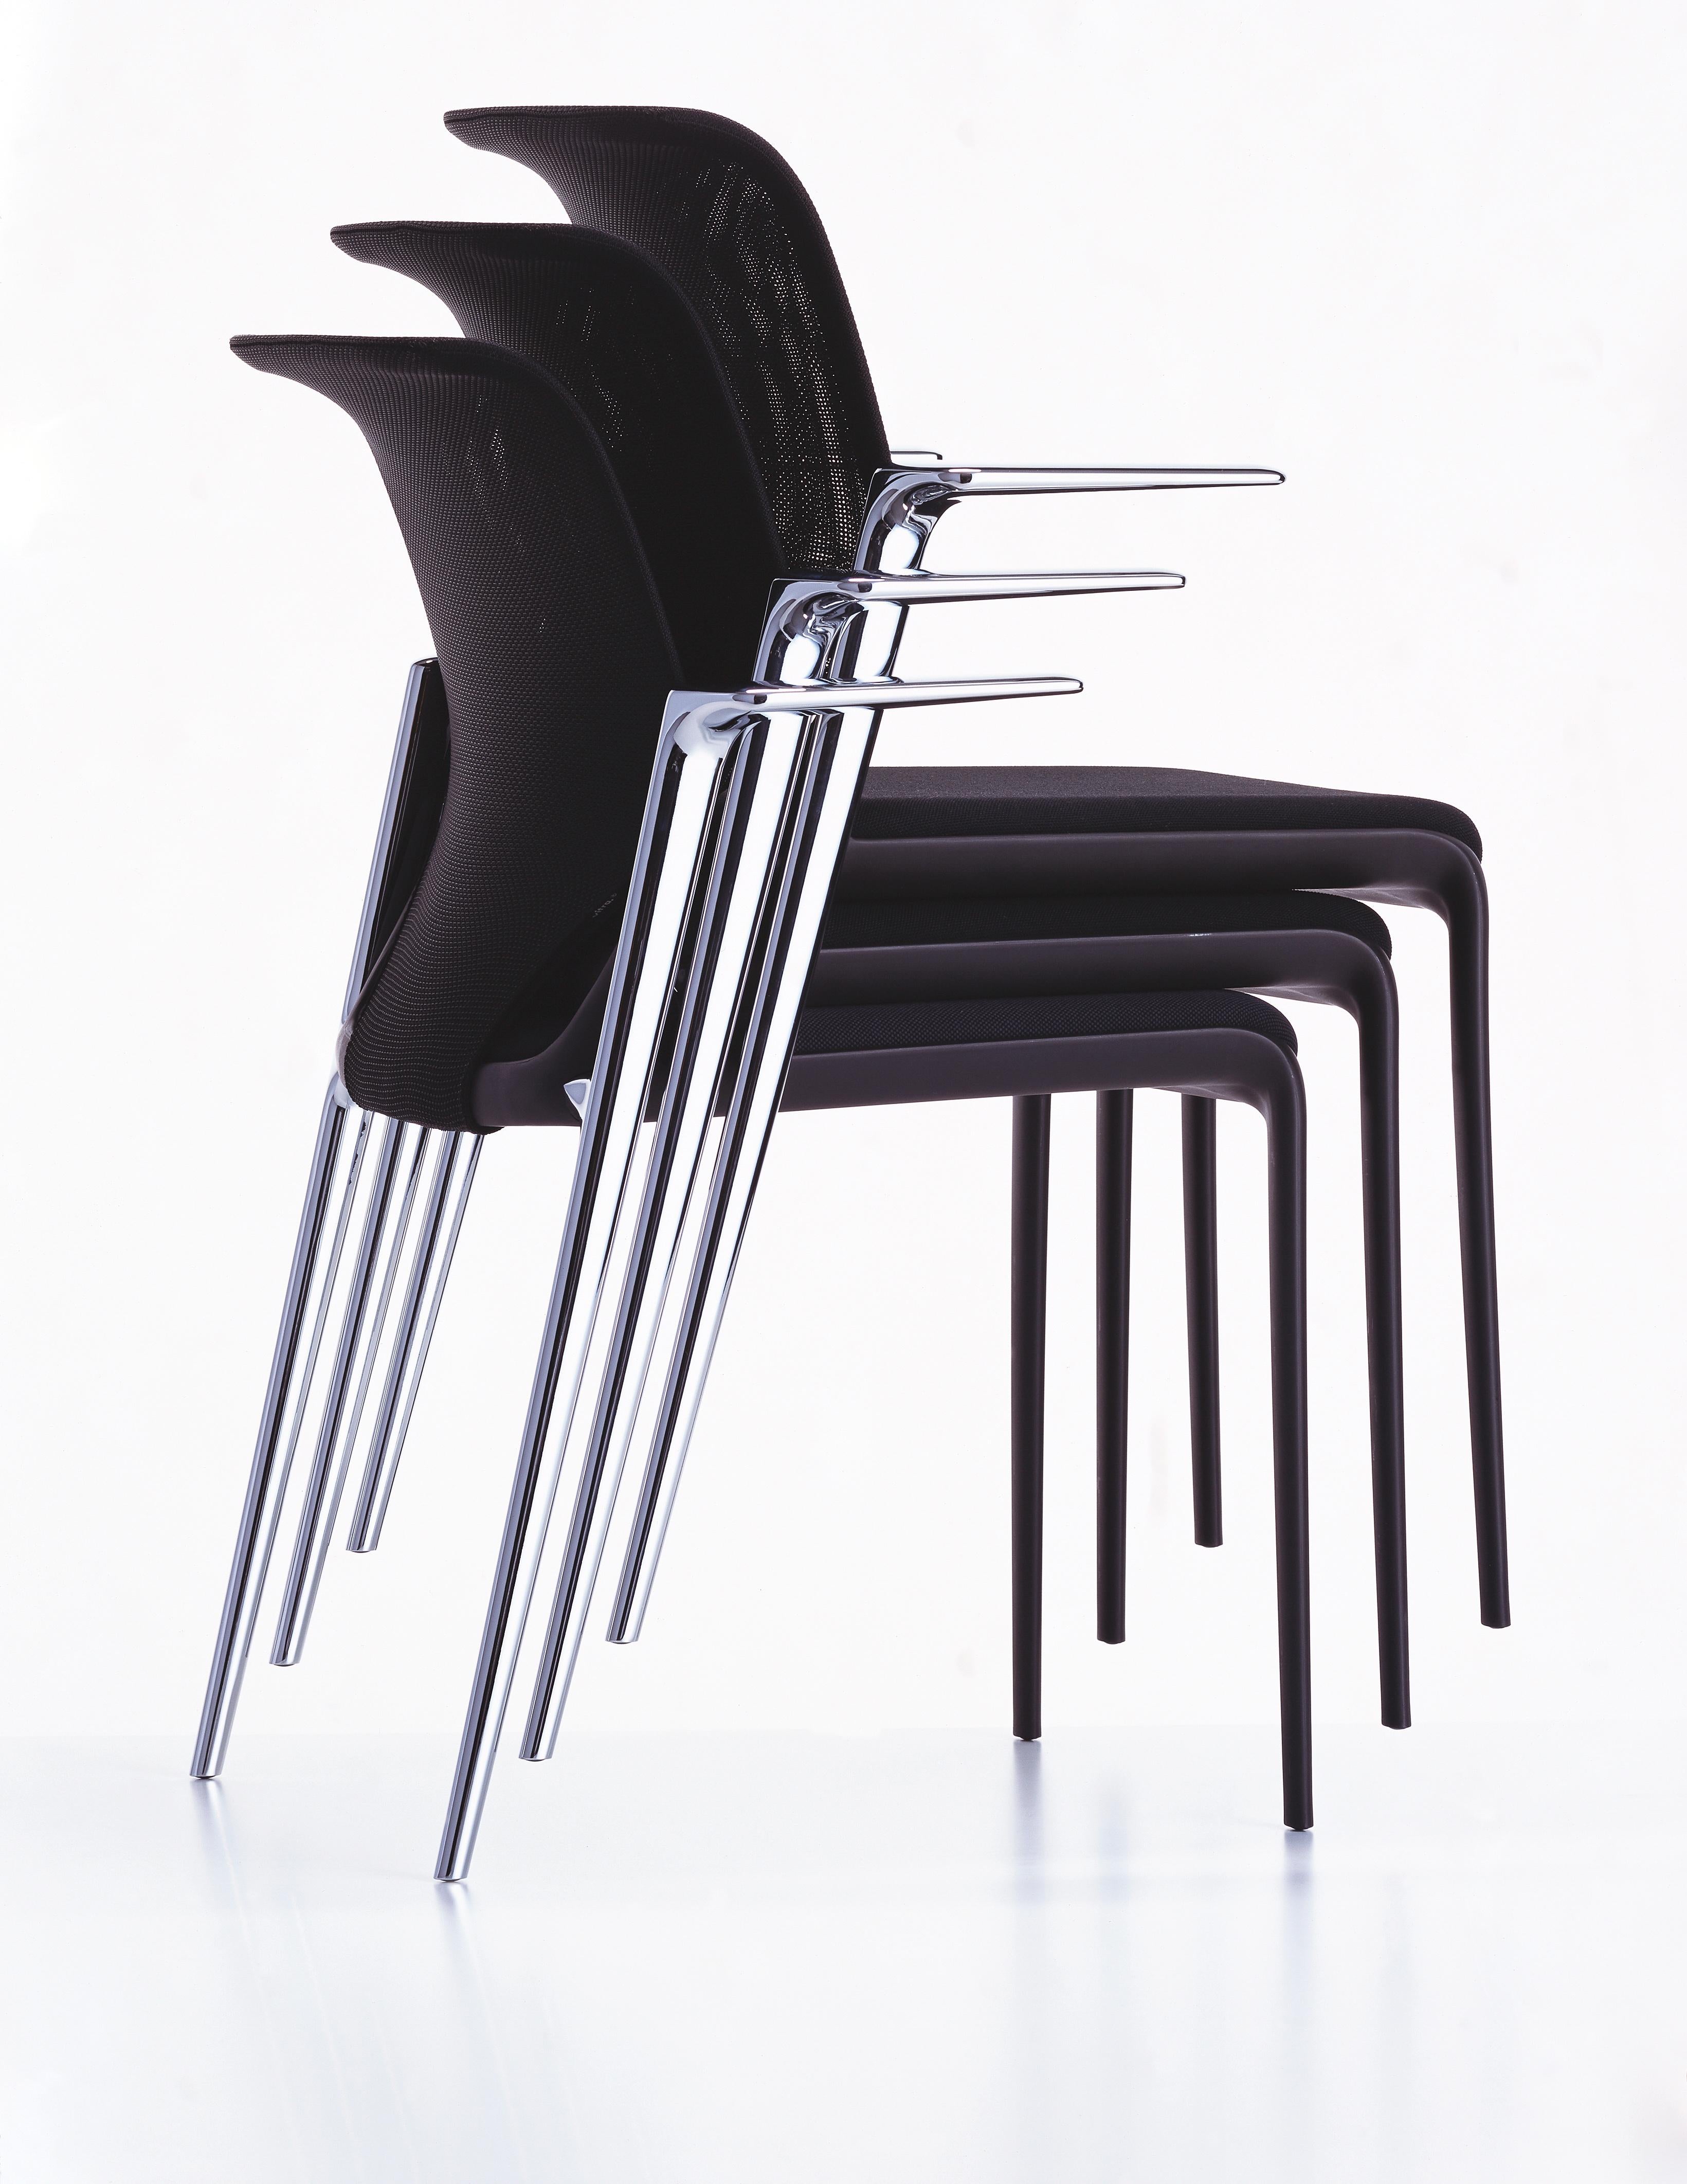 Modern Vitra Meda Slim Chair in Black Nova and Chrome Legs by Alberto Meda For Sale